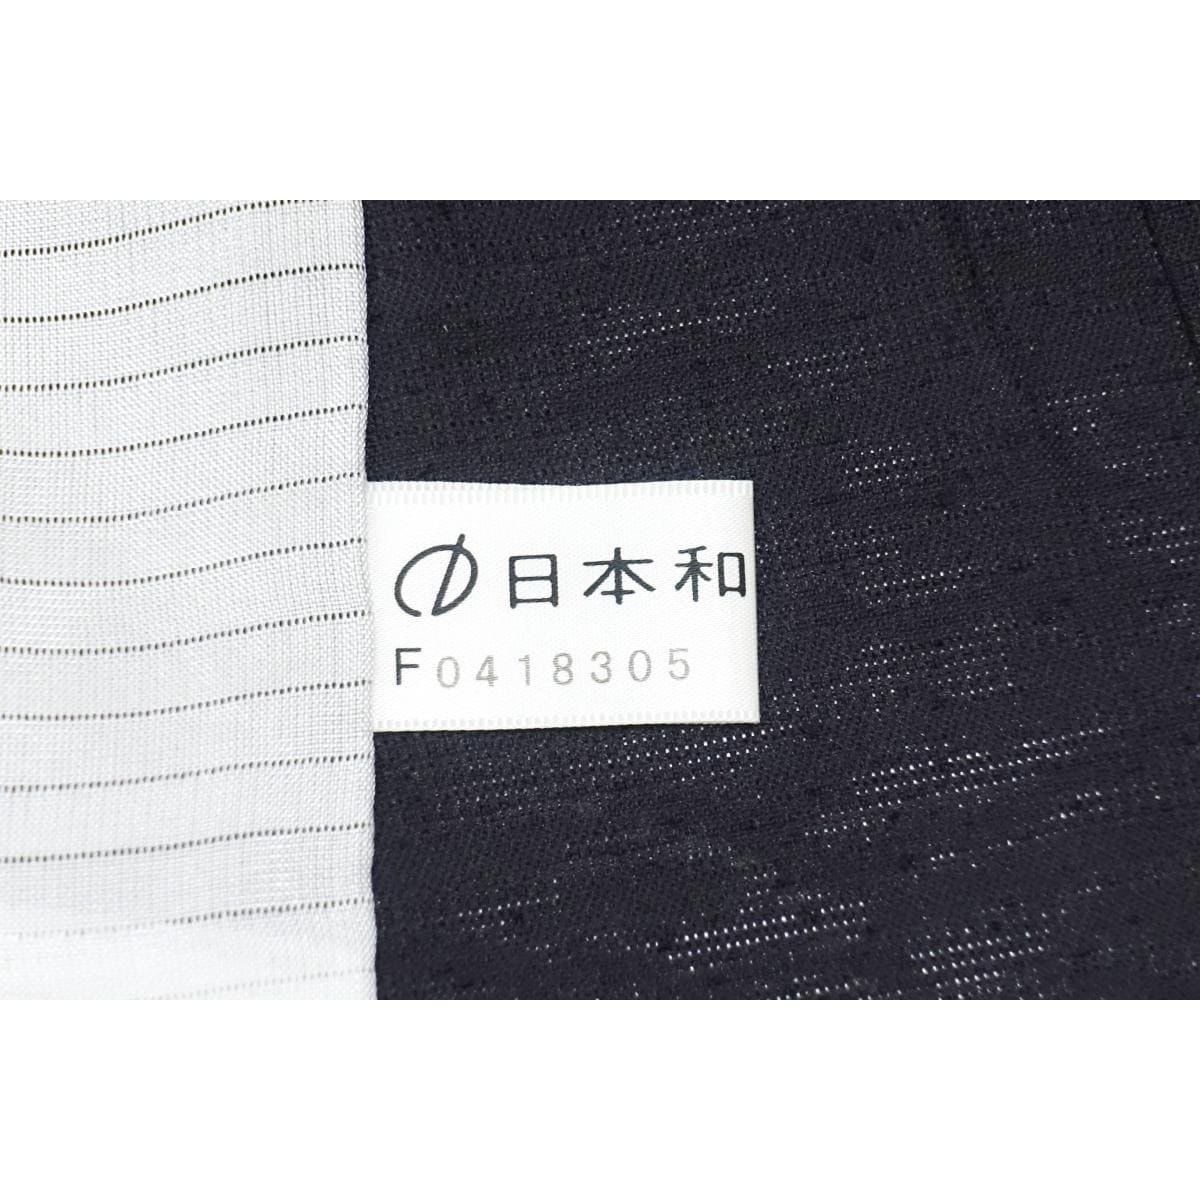 [Unused items] Single garment, Saori, silver-colored finish